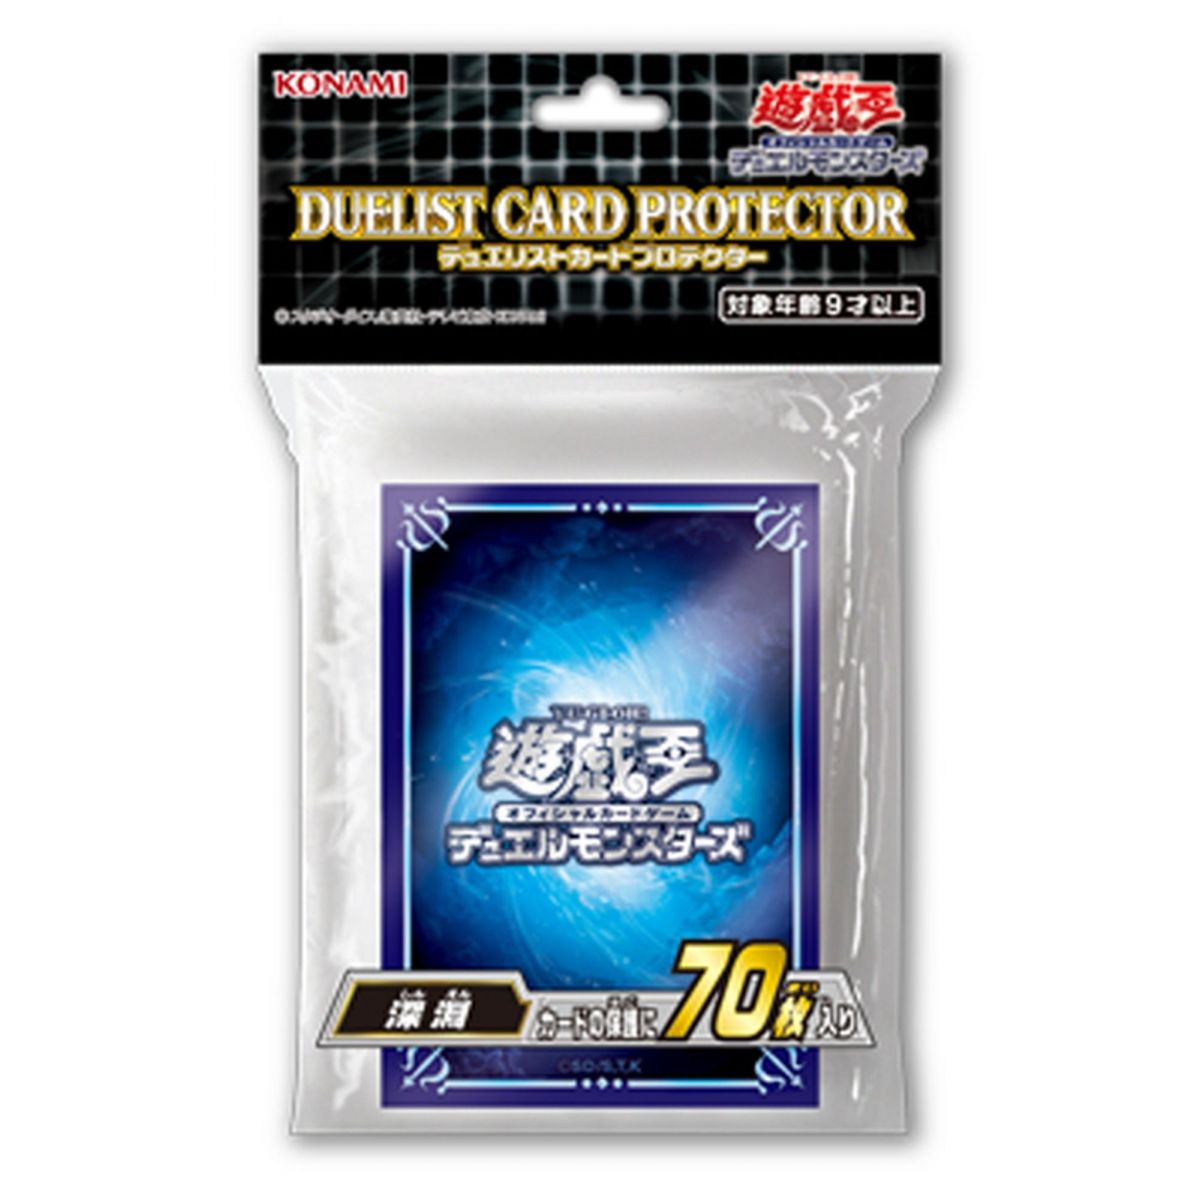 Item Yu Gi Oh! - Card Protectors - Konami Abyss Duelist Card Protector (70) - OCG